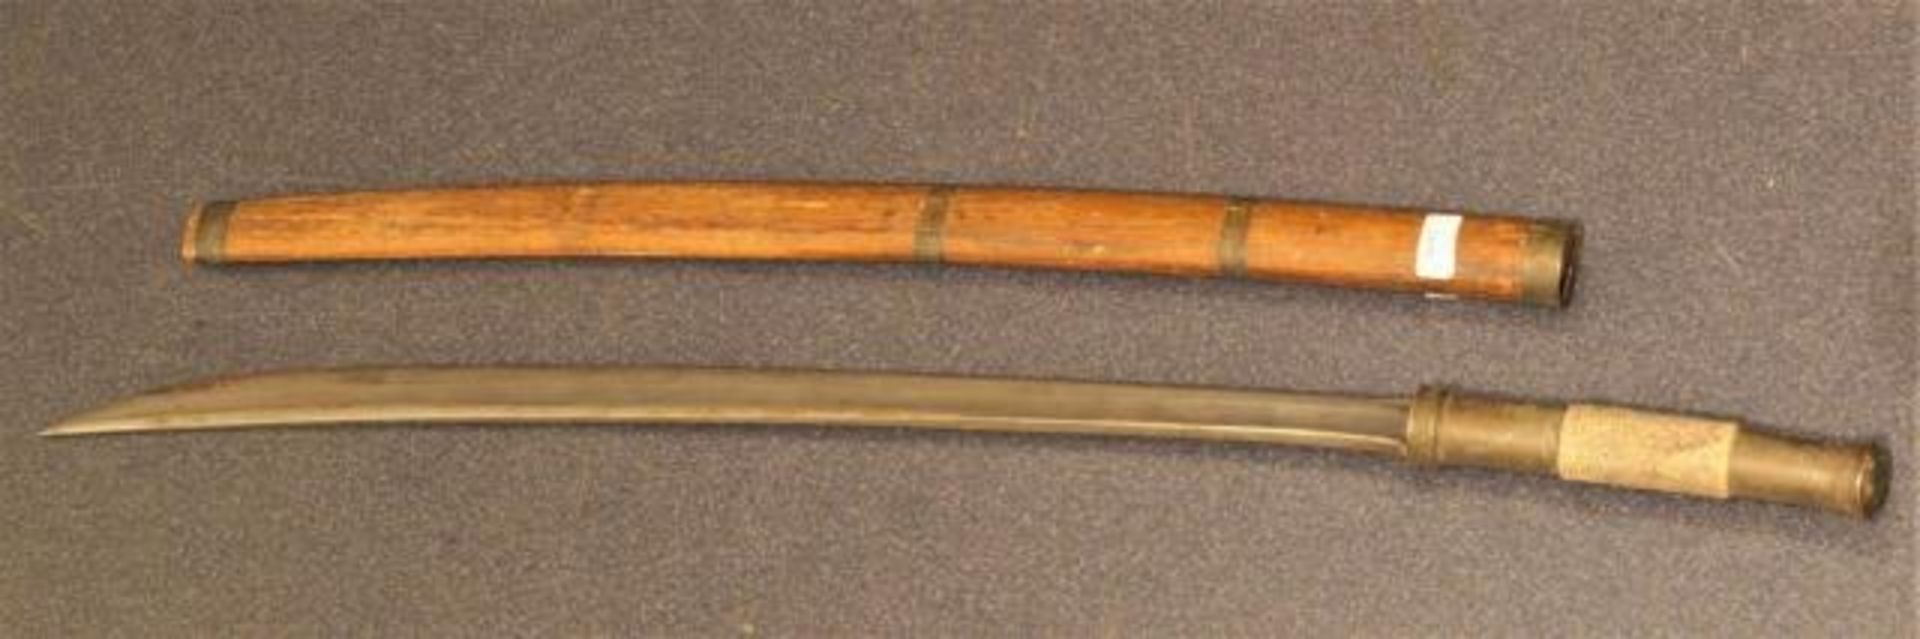 Birmese sword, grip with ray skin, l. 80 cm.